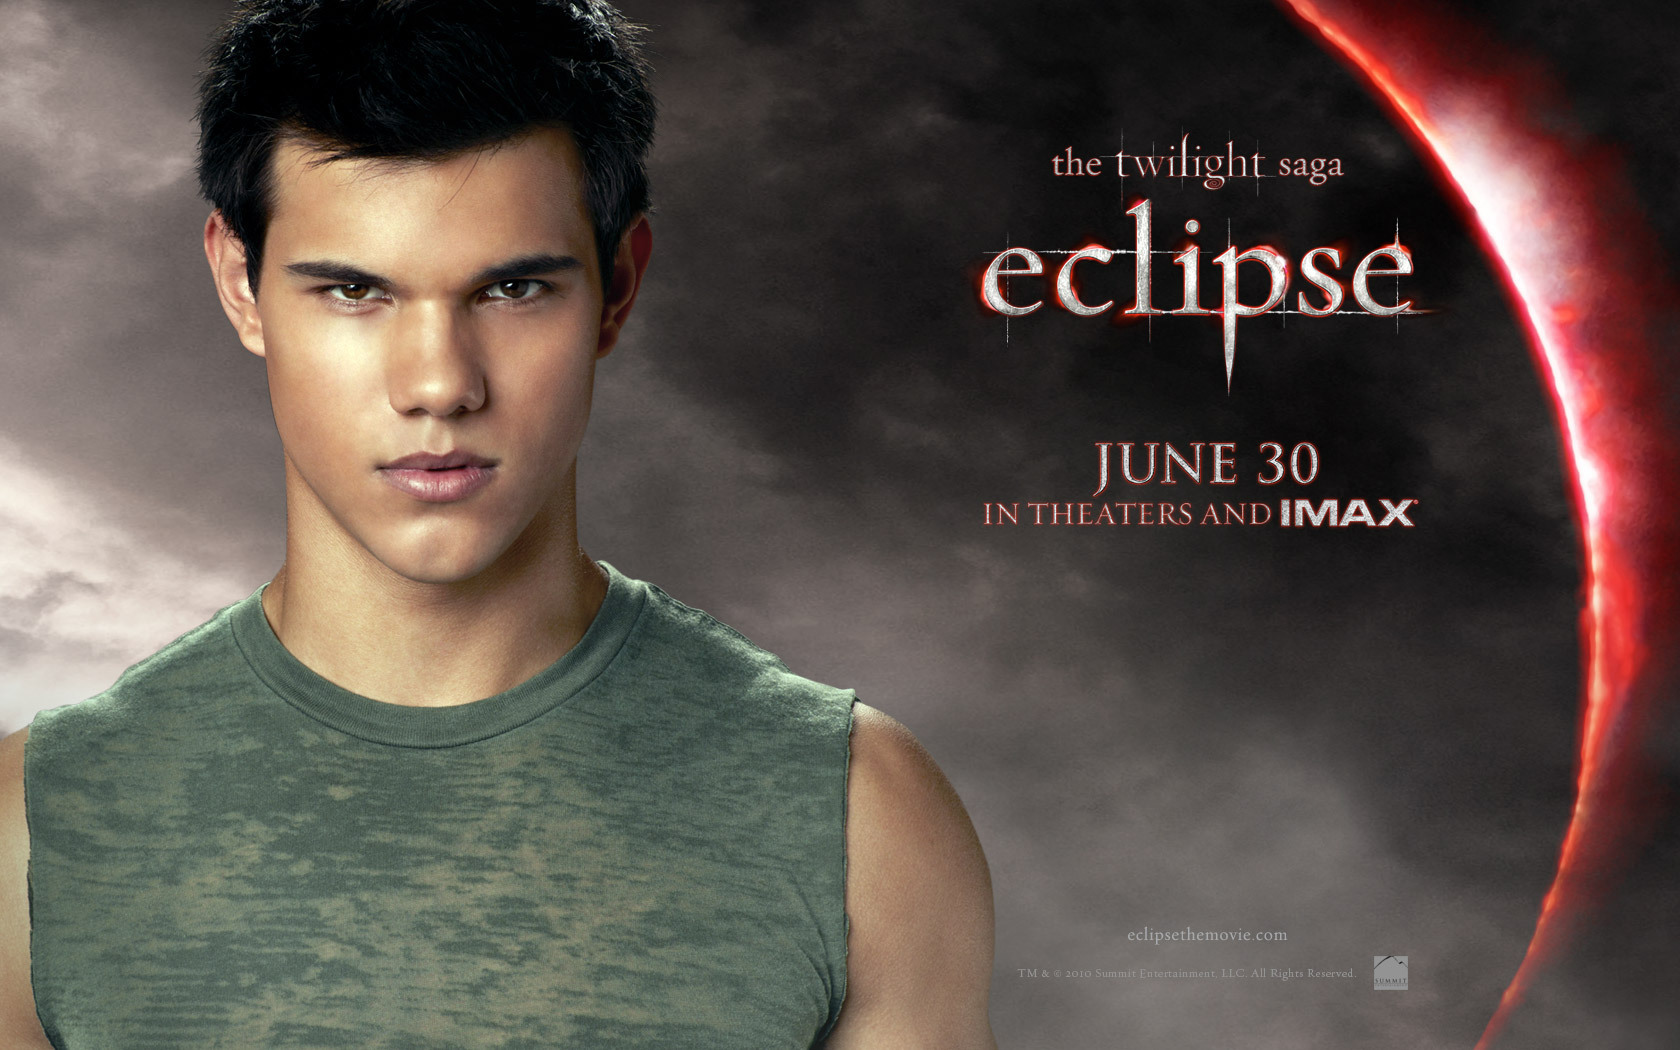 Taylor Lautner Twilight Saga Eclipse HD Wallpaper And Background